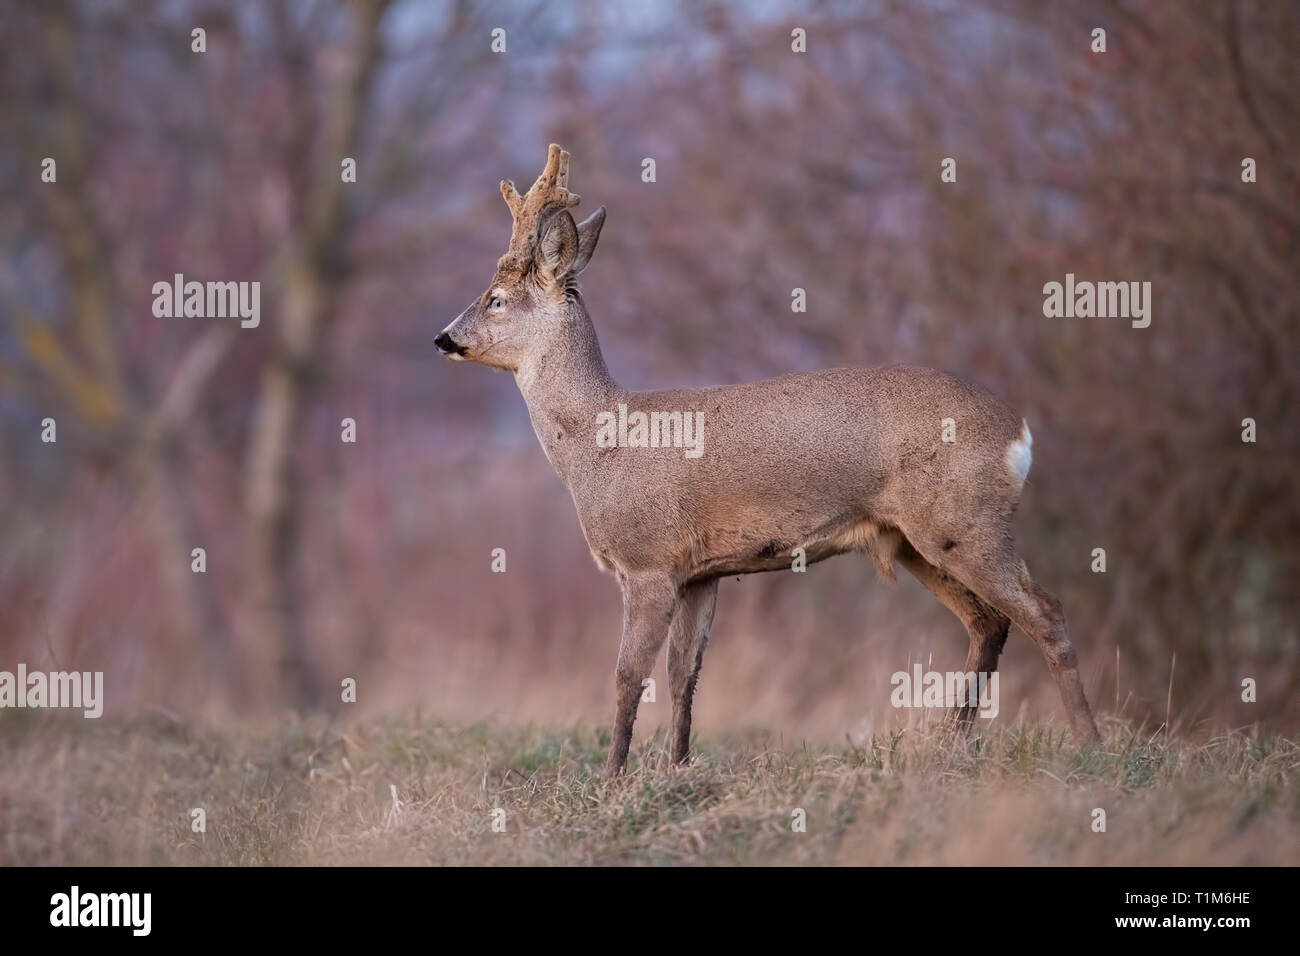 Roe deer, capreolus capreolus, buck with big antlers covered in velvet. Curious alerted wild animal in winter. Roebuck with antlers growing. Stock Photo